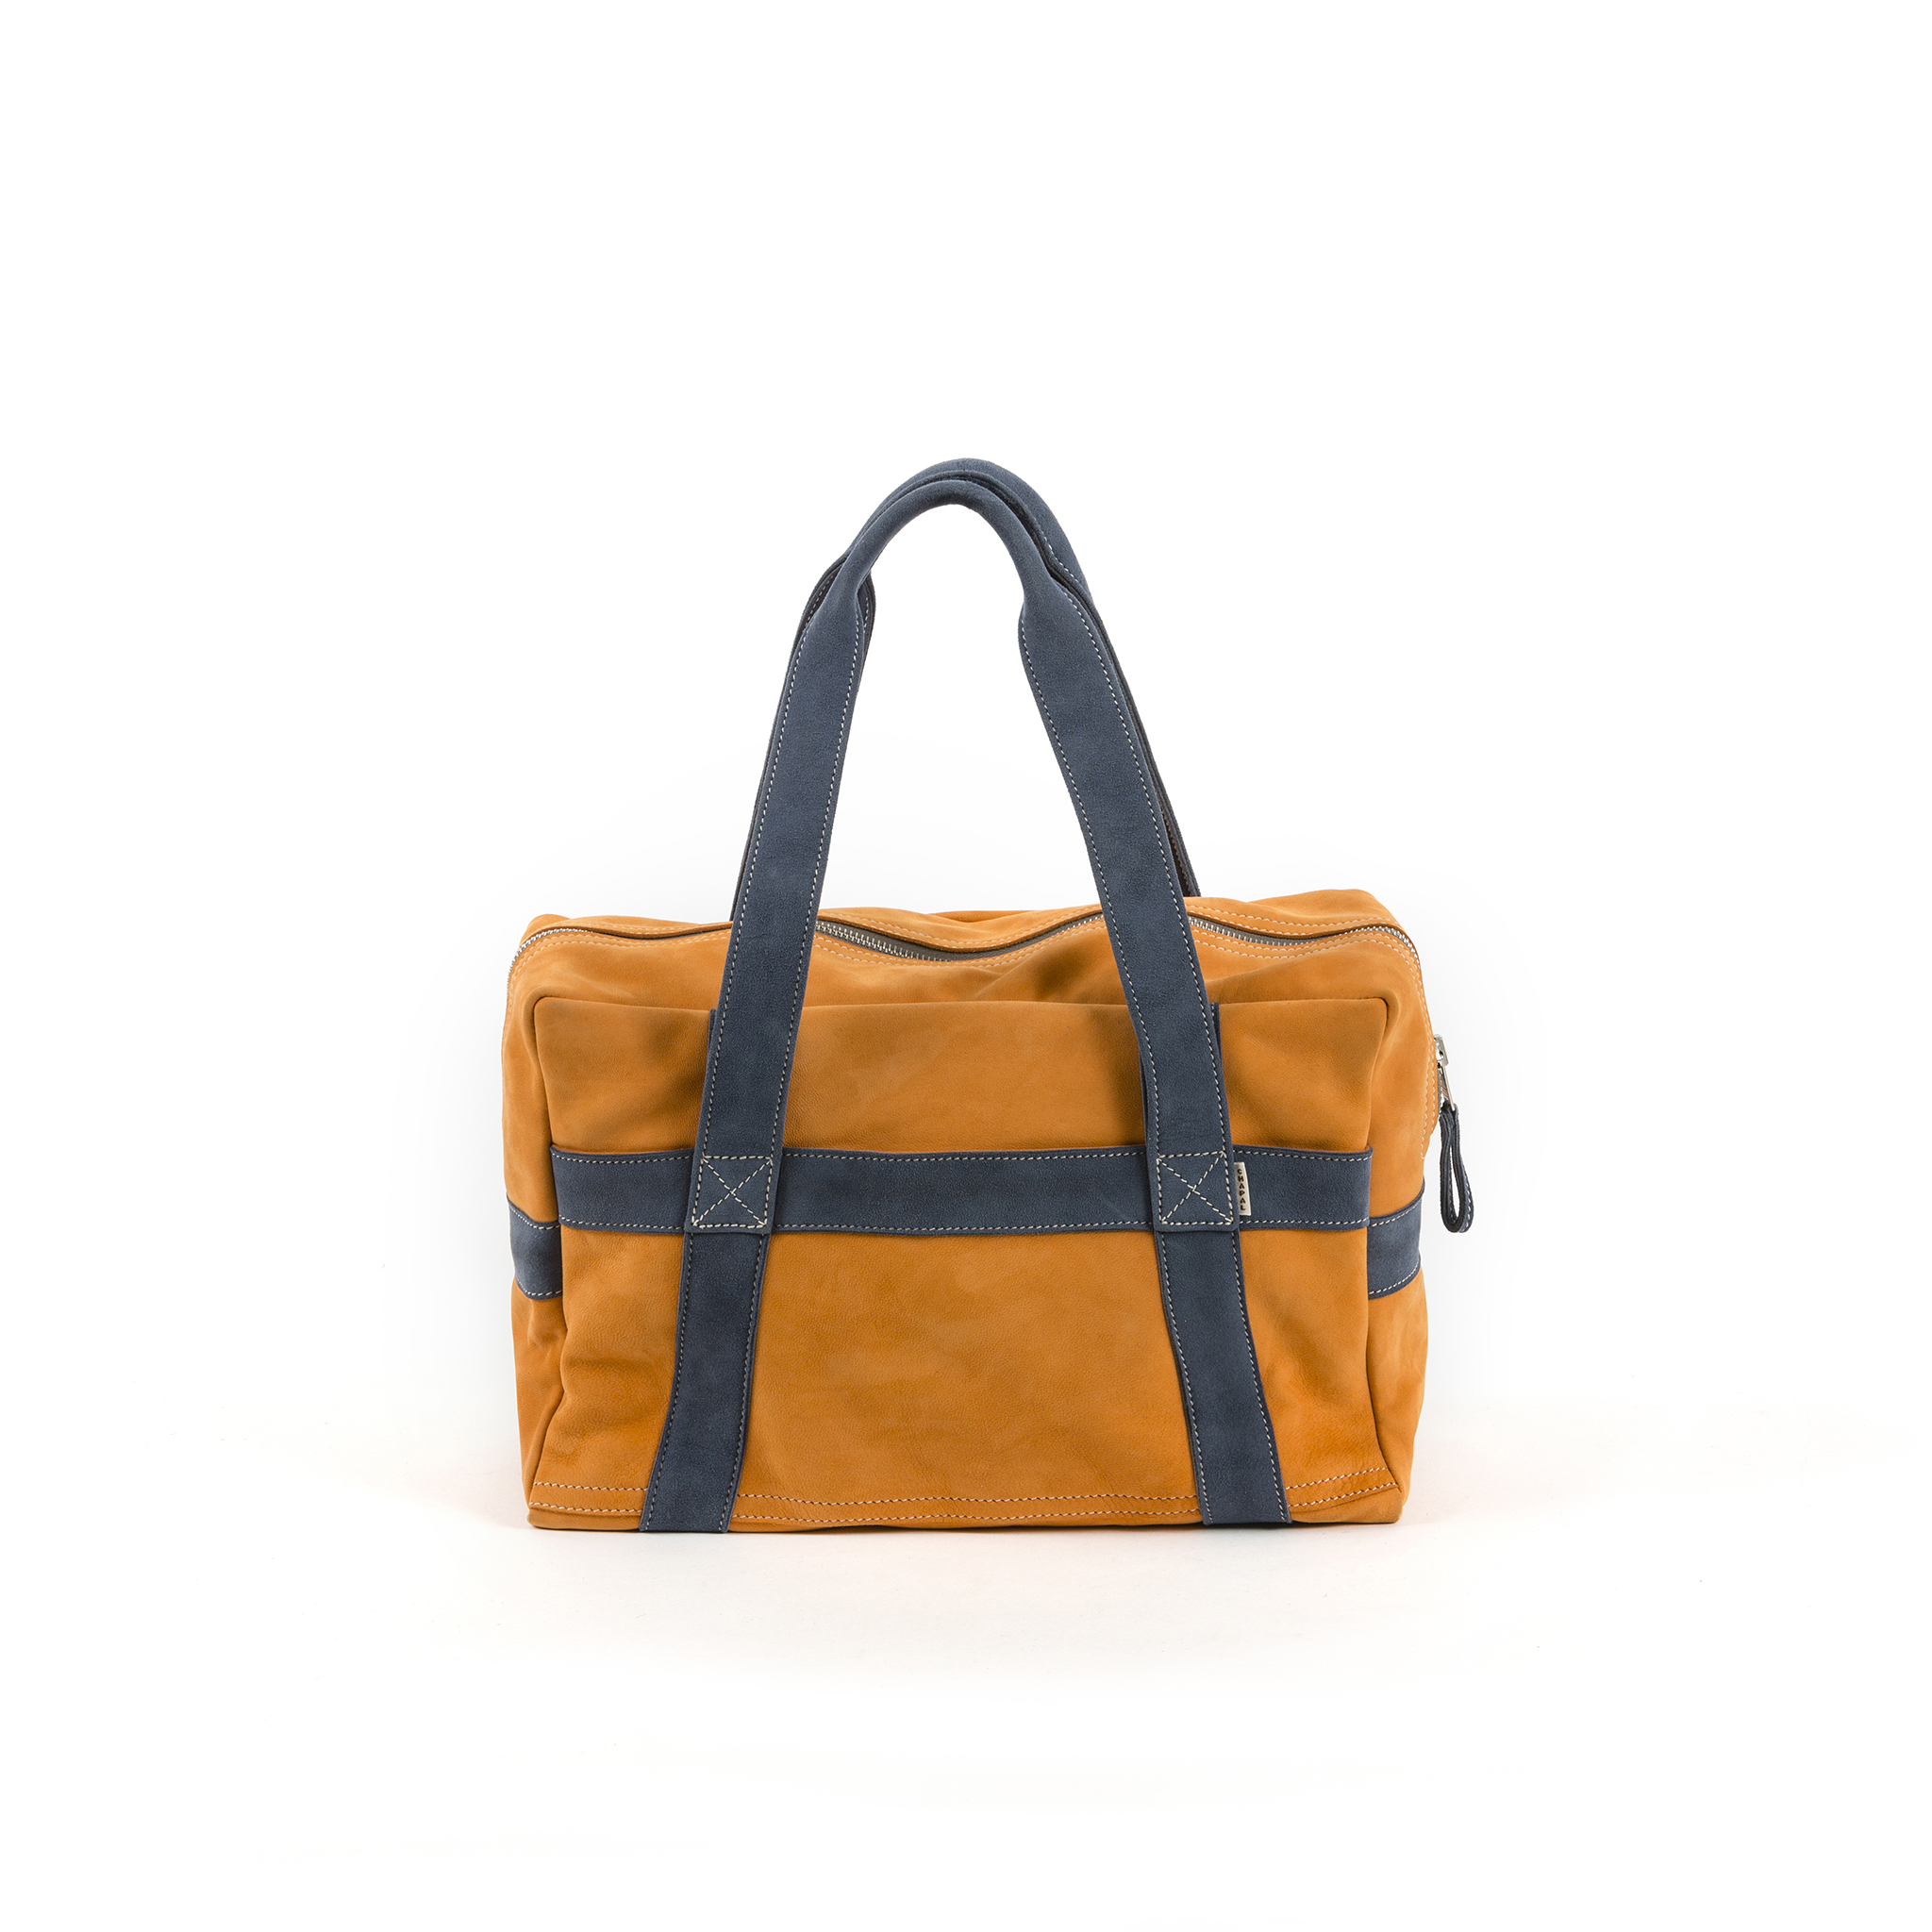 Medium Soft Bag - Suede leather - Orange and blue colors